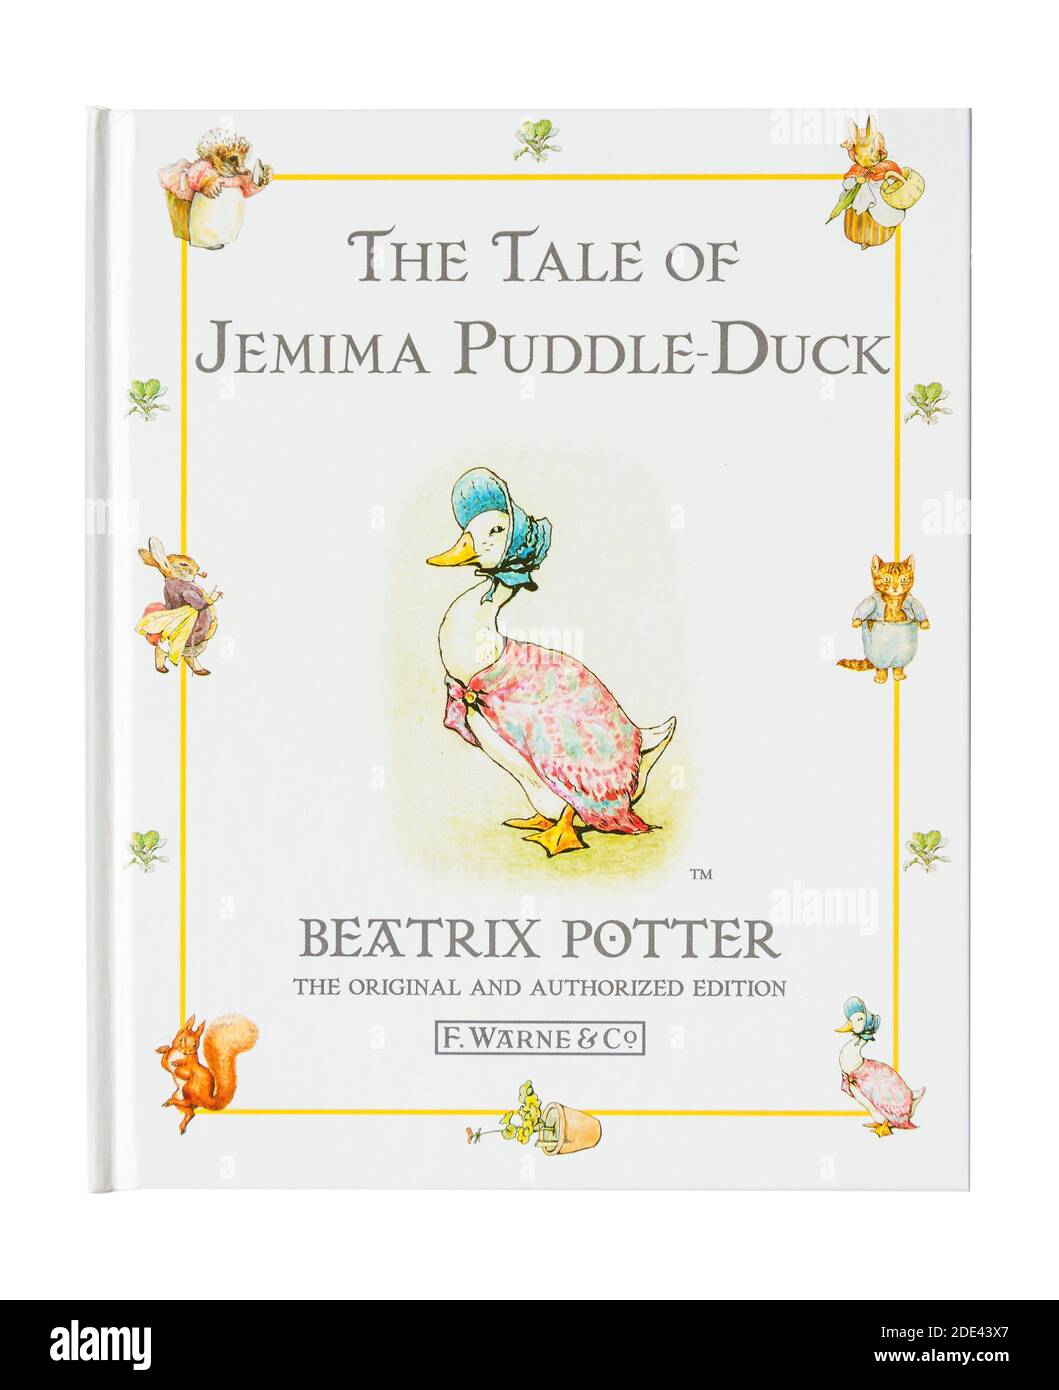 Libro para niños 'The Tale of Jemima Puddle-Duck' de Beatrix Potter, Gran Londres, Inglaterra, Reino Unido Foto de stock